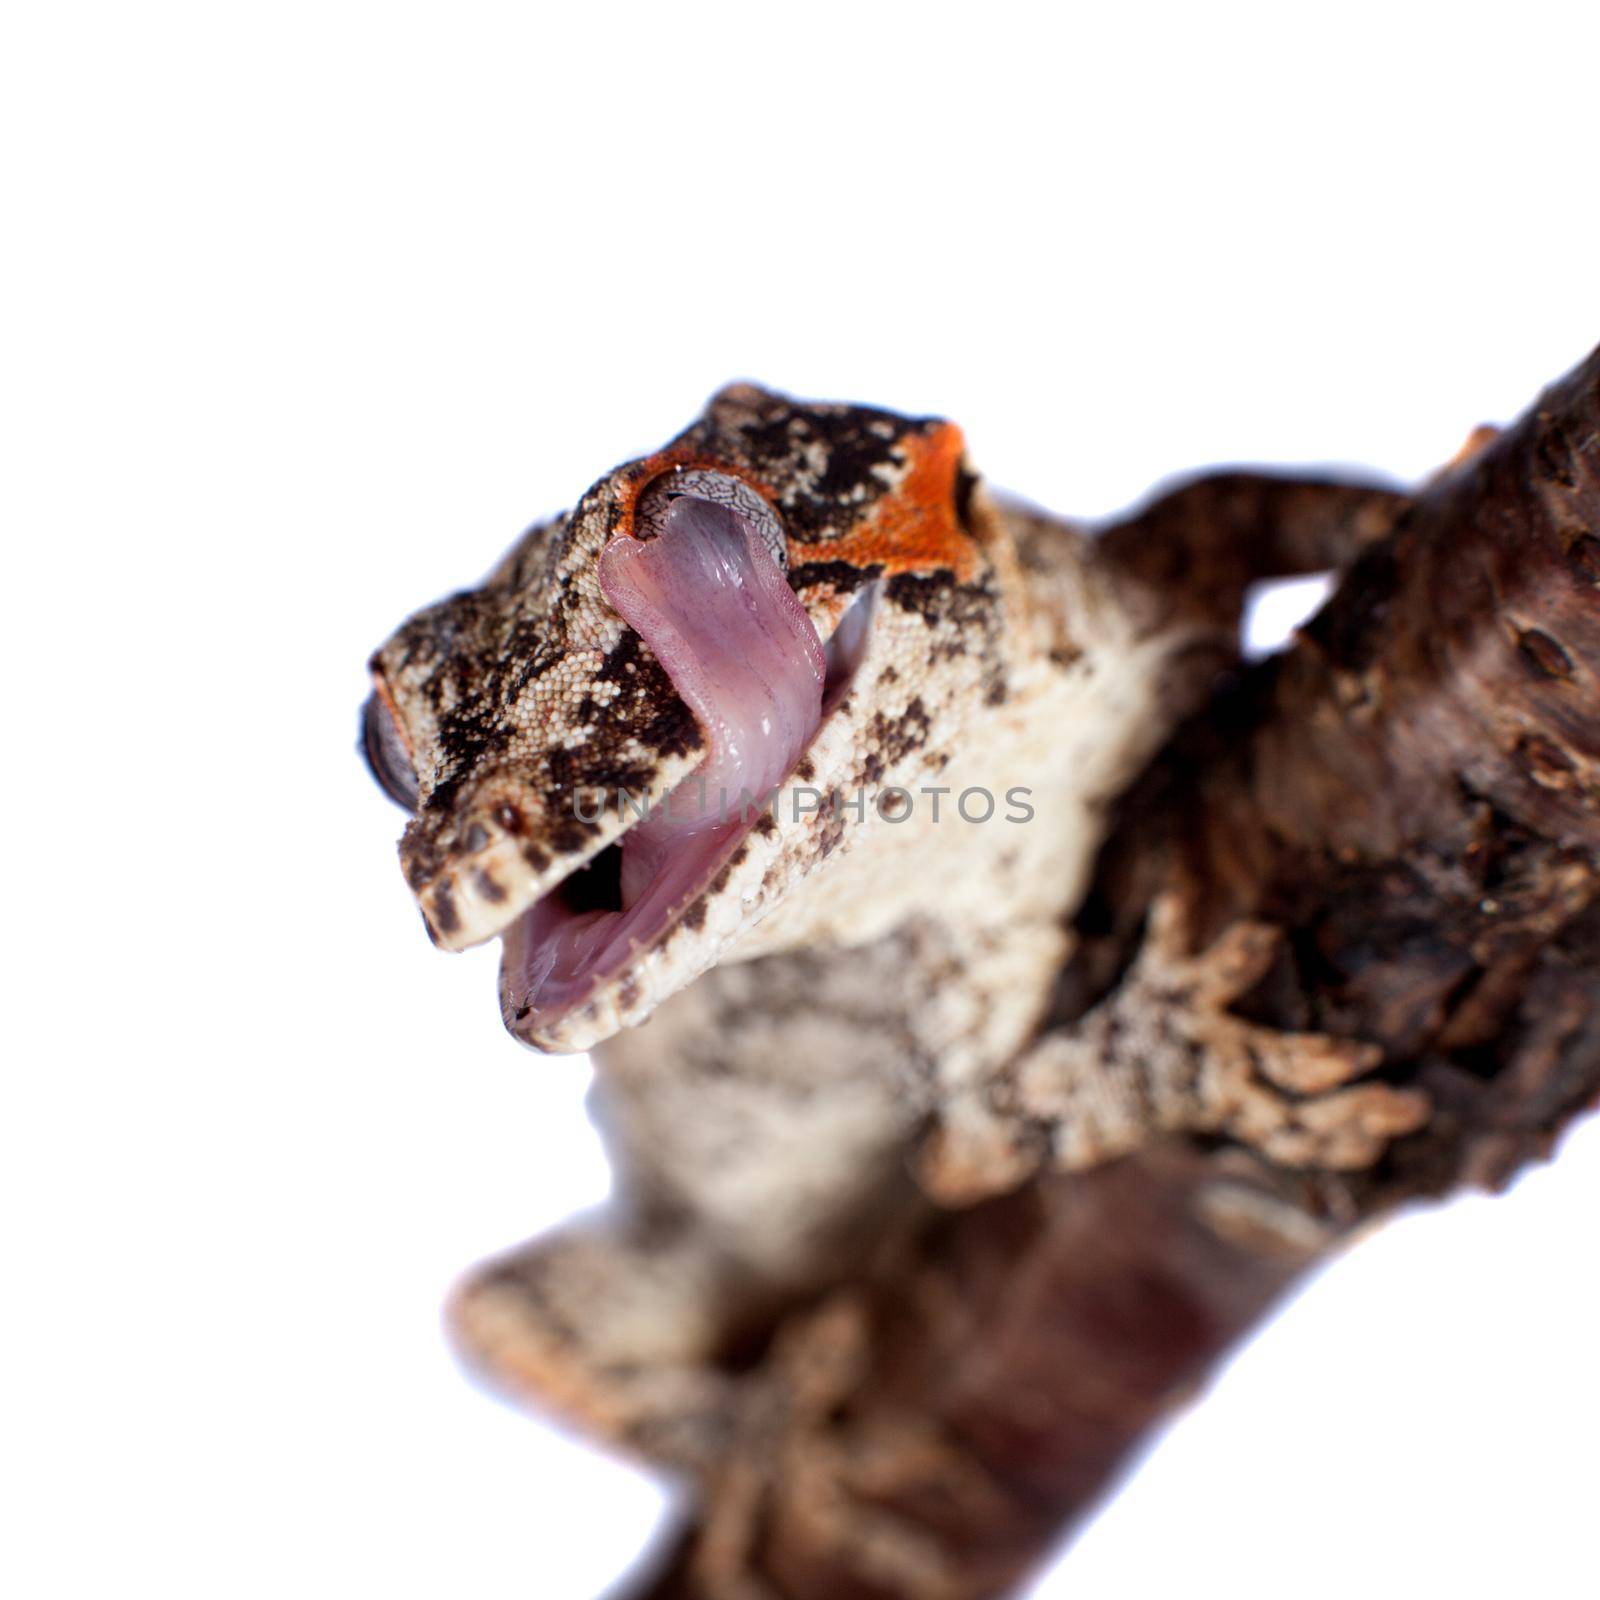 The gargoyle, New Caledonian bumpy gecko on white by RosaJay